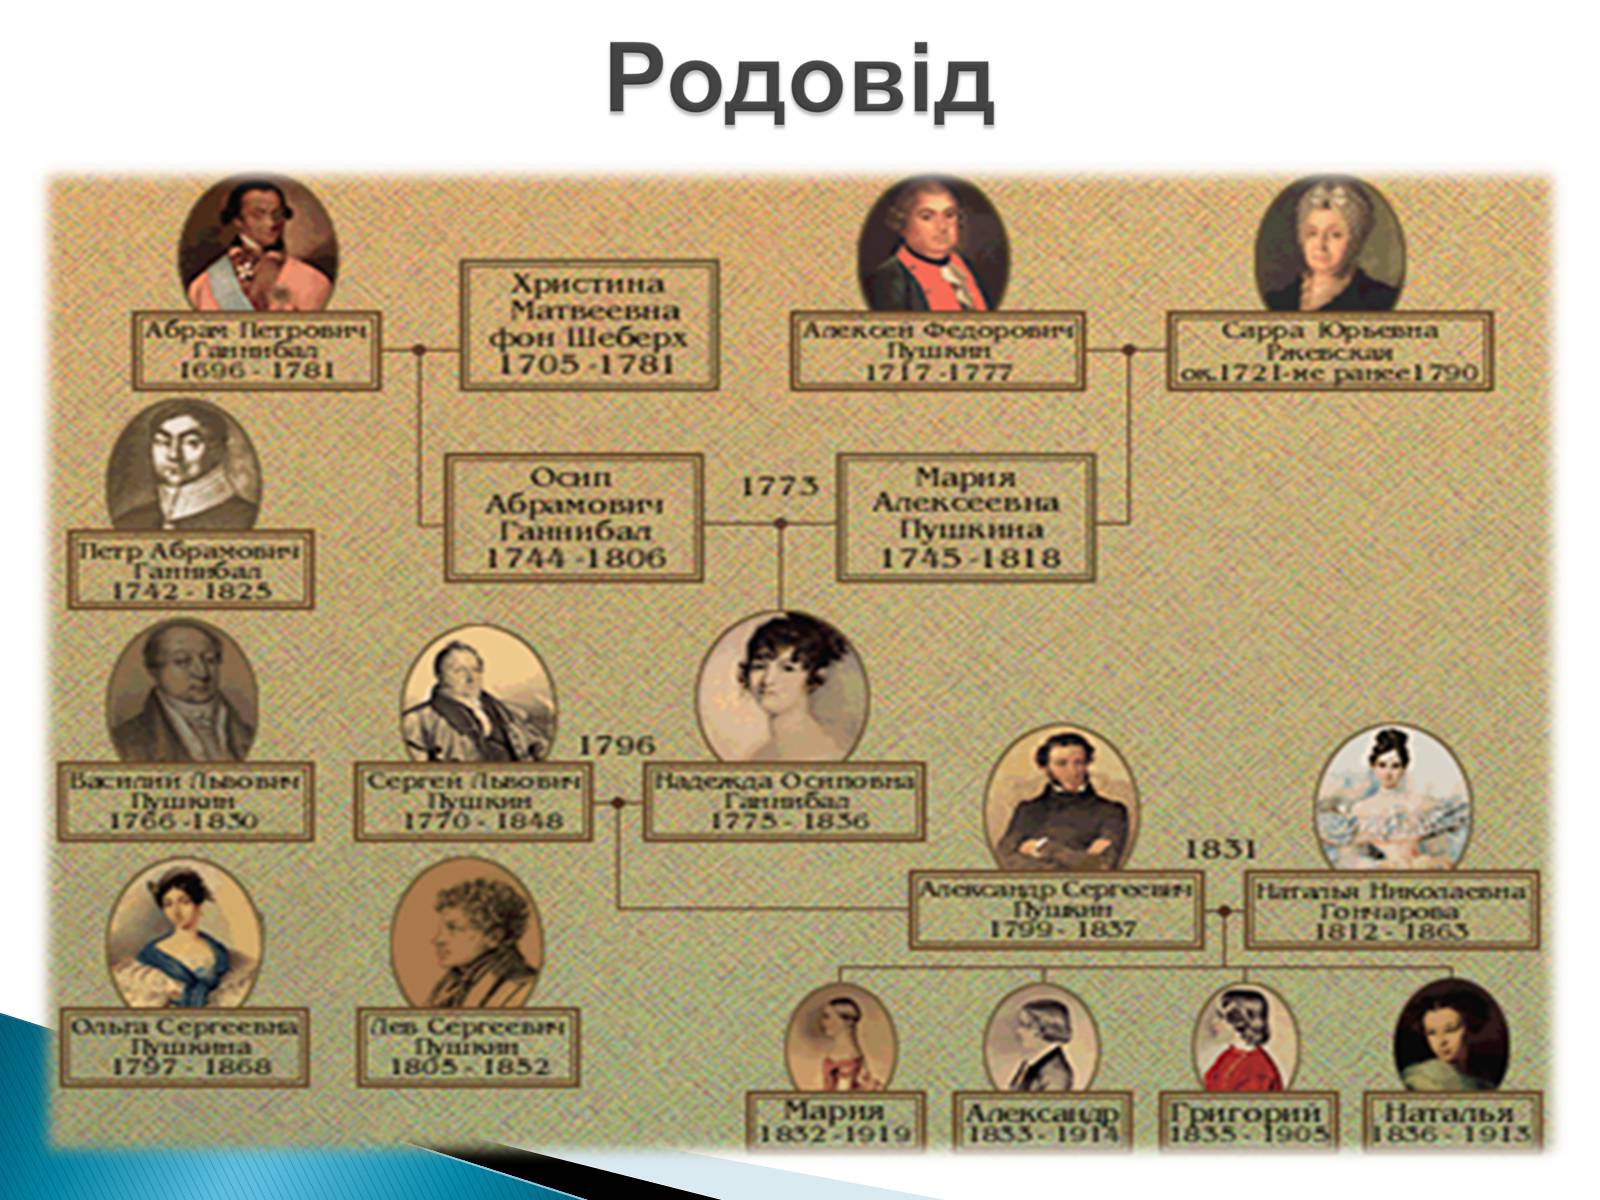 Древо семьи Пушкина Александра Сергеевича